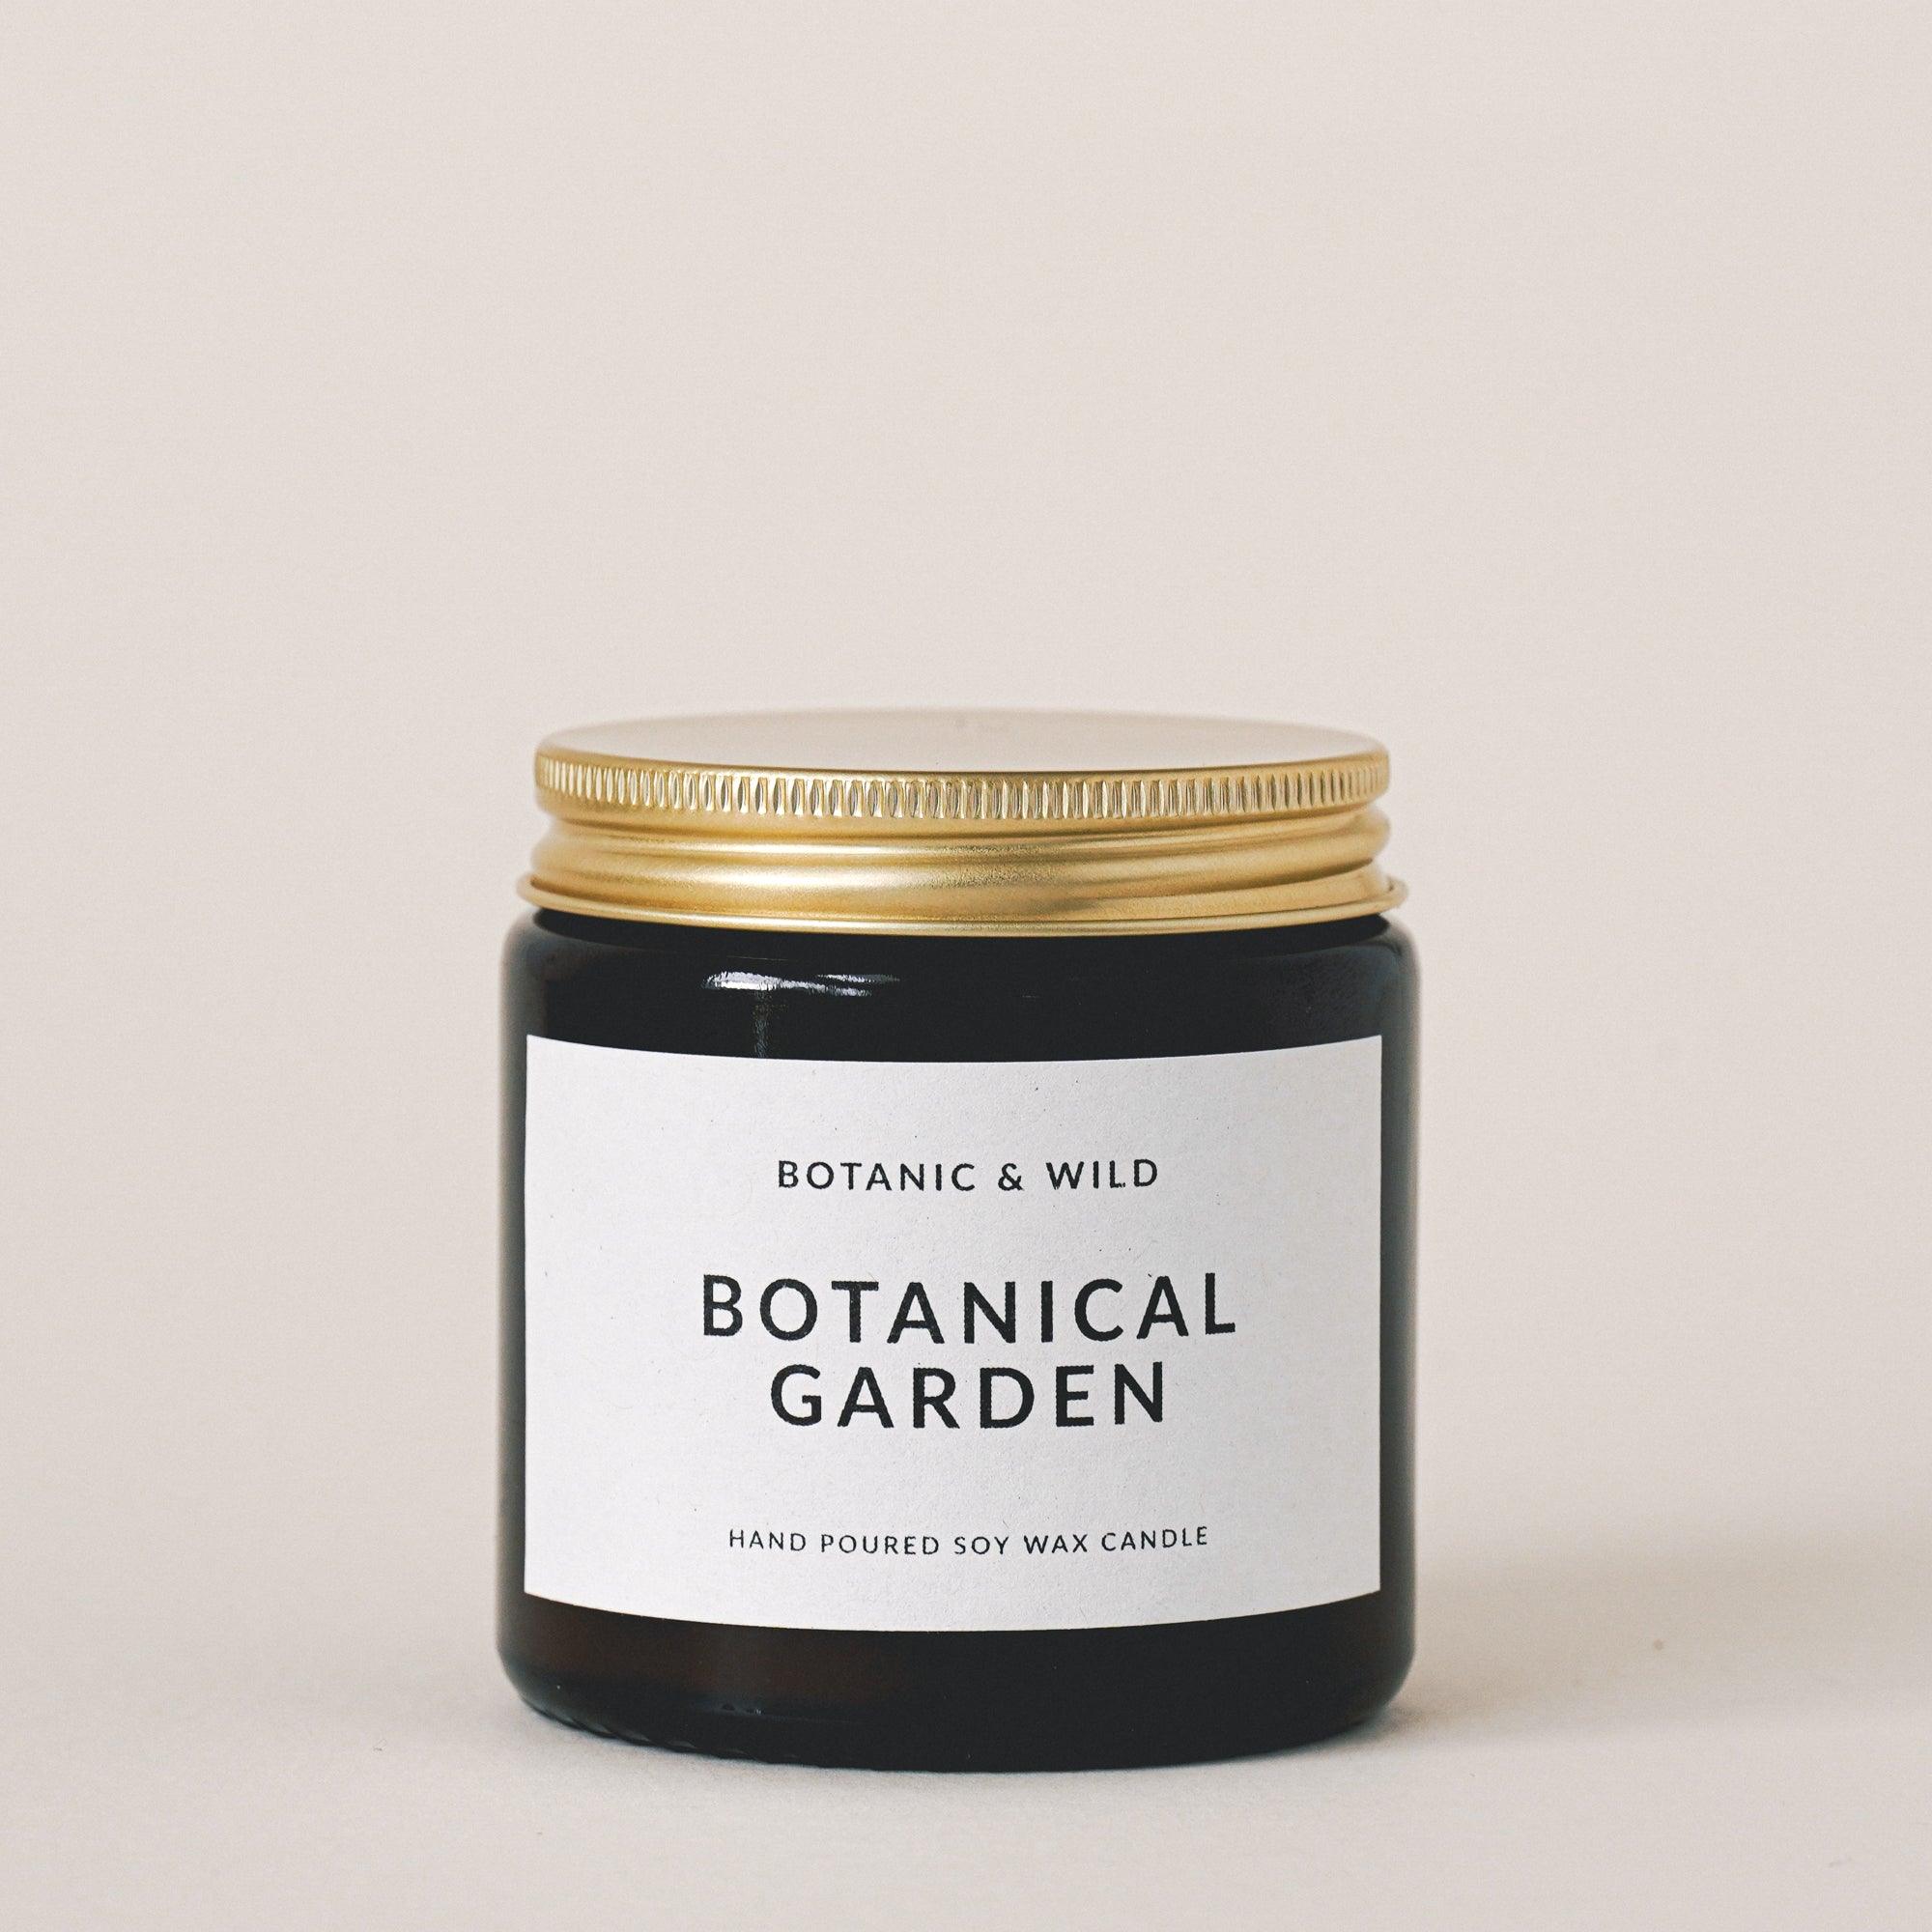 BOTANICAL GARDEN Scented Soy Candles - Botanic & Wild